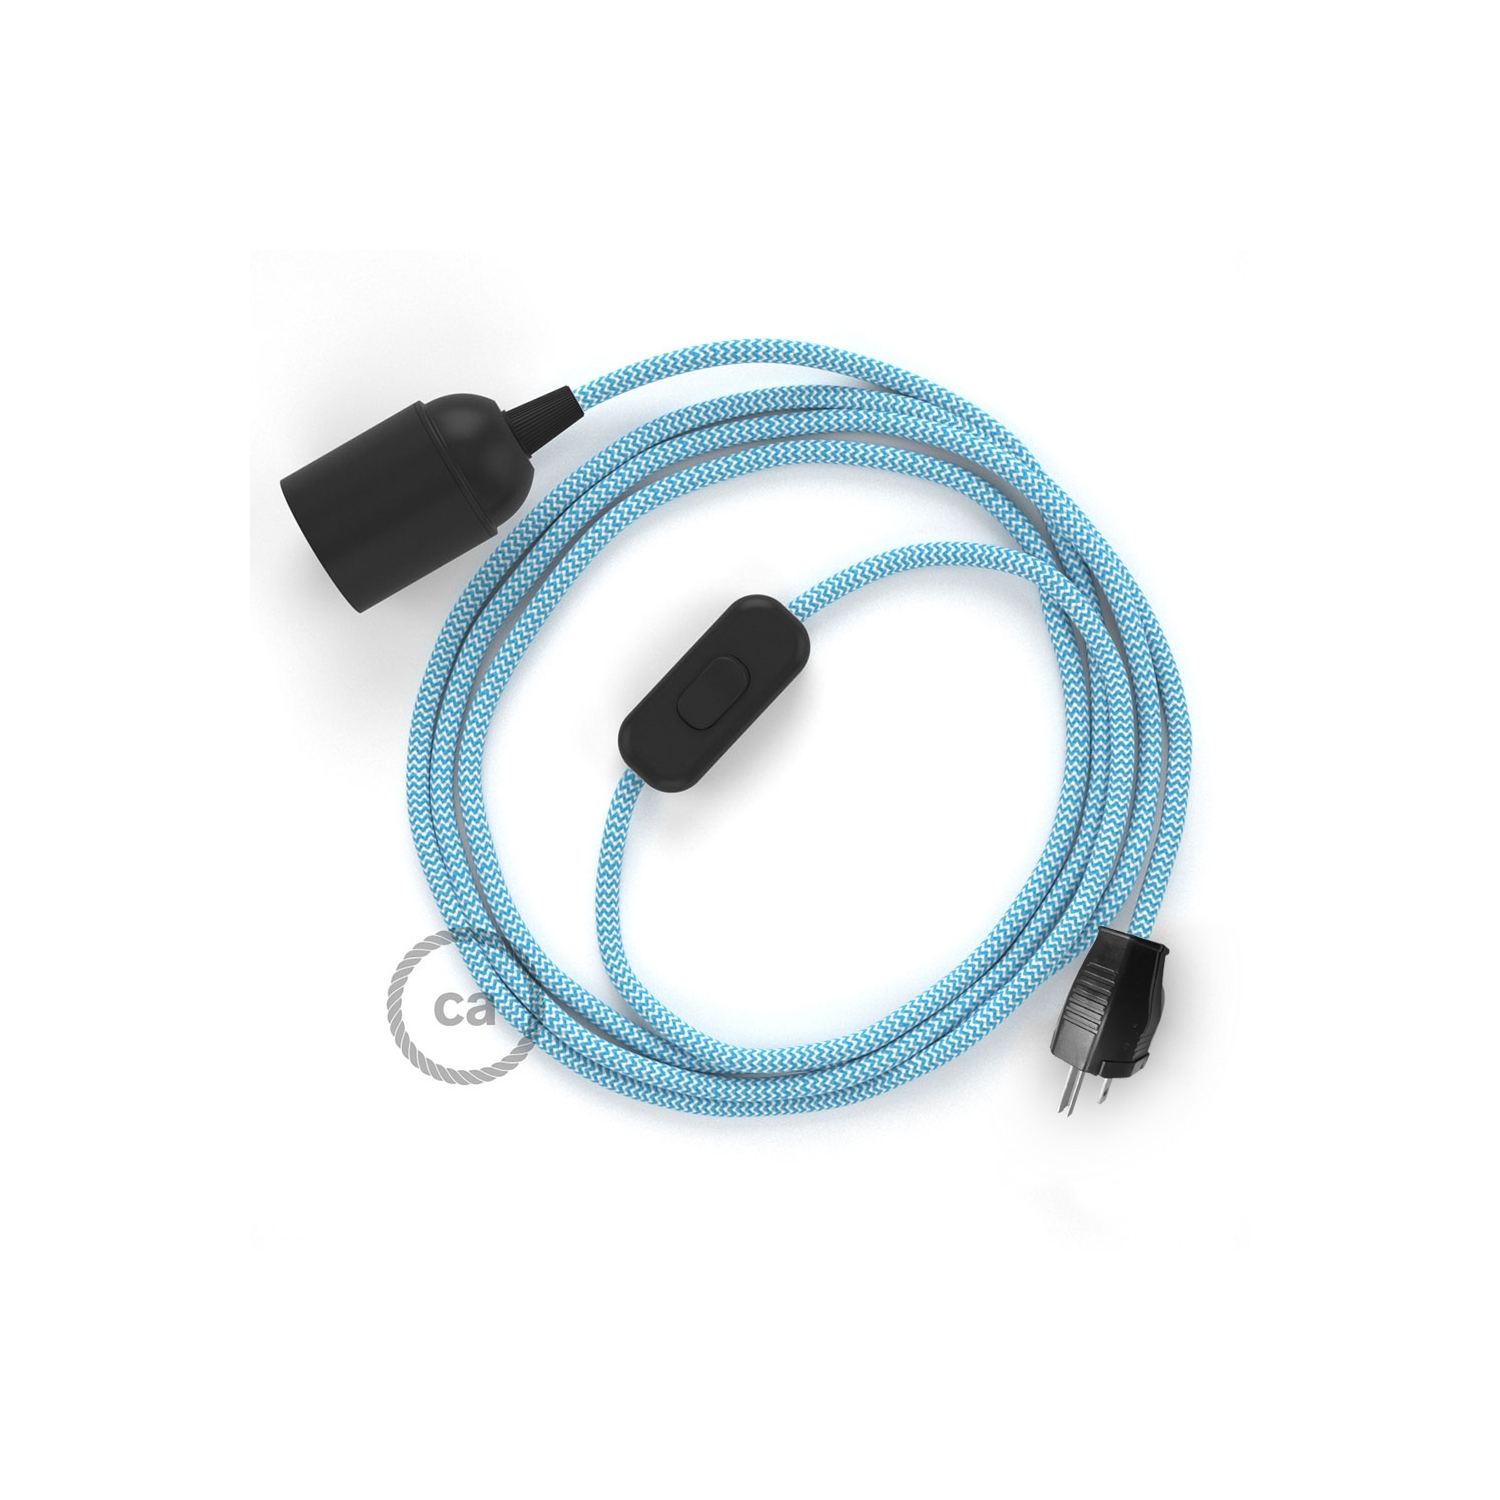 Plug-in Pendant with inline switch | RZ11 Light Blue & White Chevron